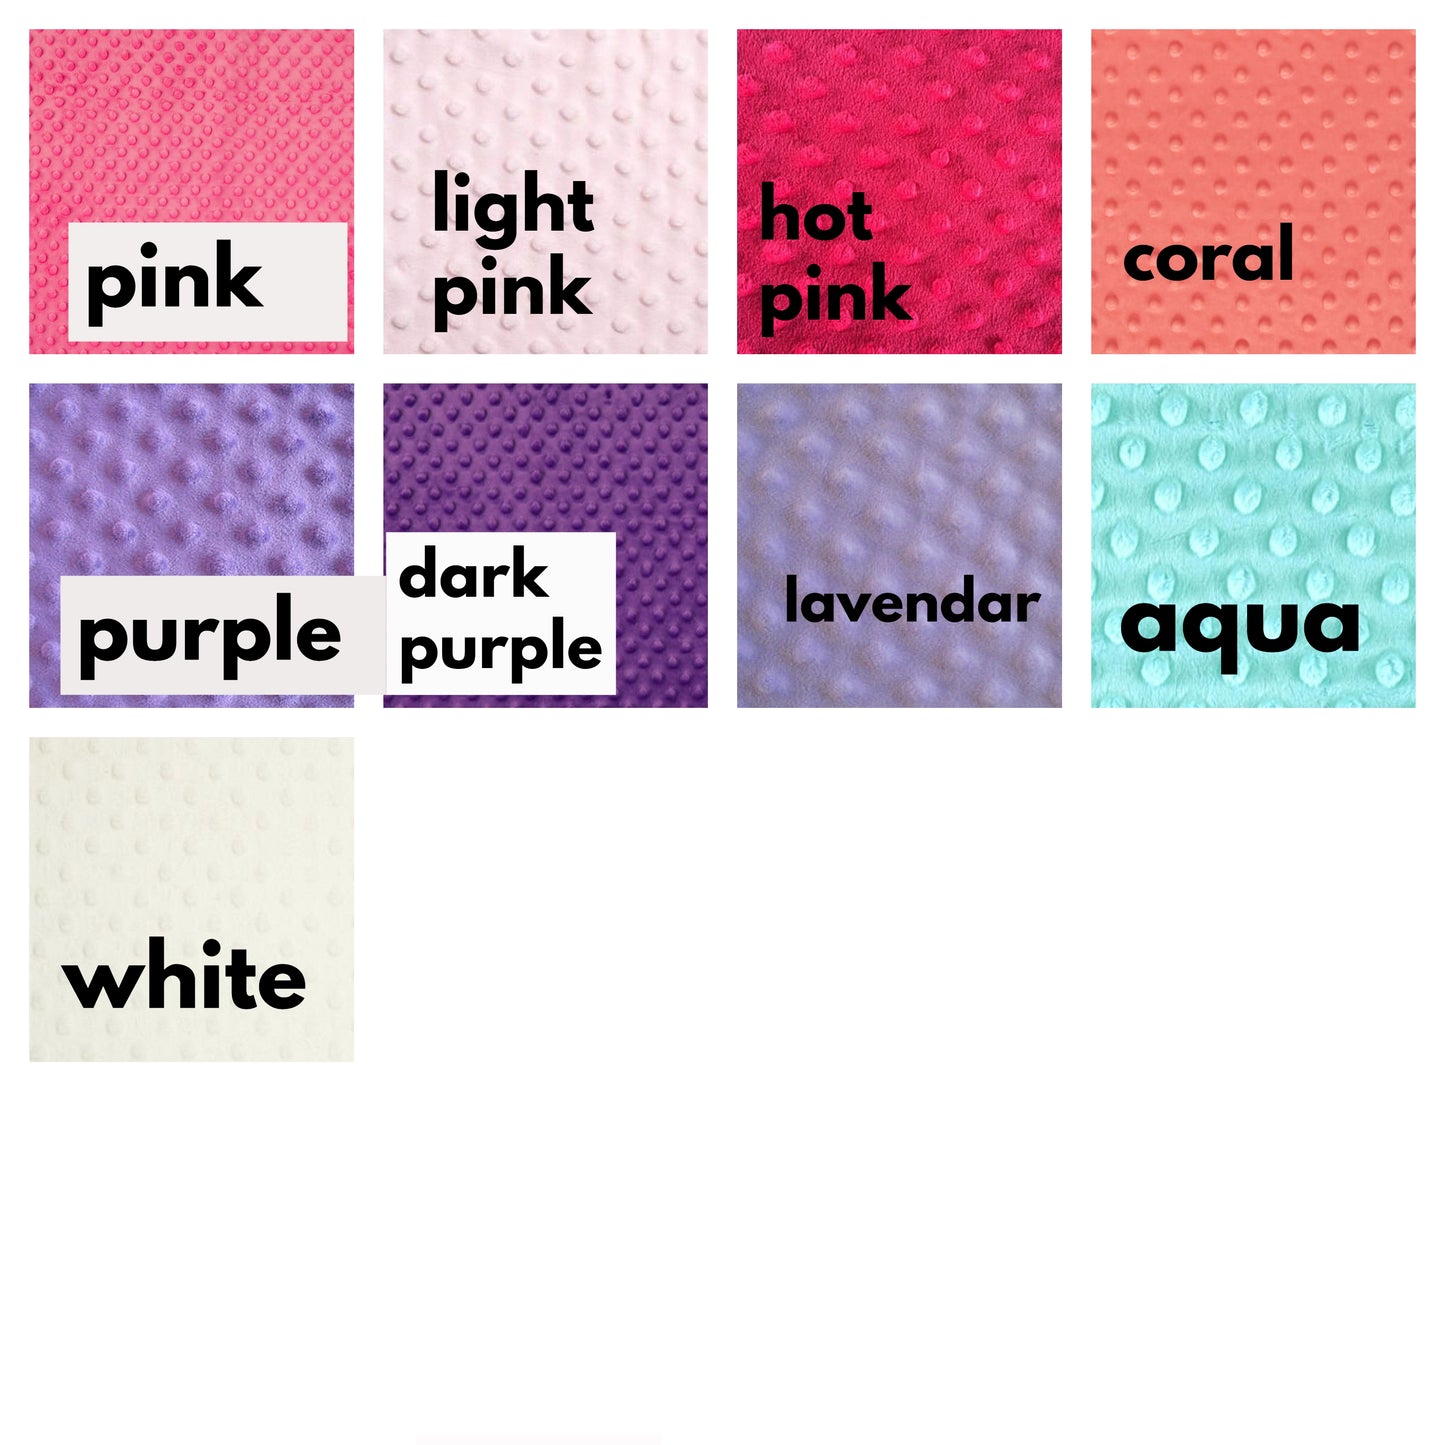 minky colors available - PINK, LIGHT PINK, HOT PINK, CORAL, PURPLE, DARK PURPLE, LAVENDAR, AQUA, FLAT AQUA (NOT SHOWN) & WHITE